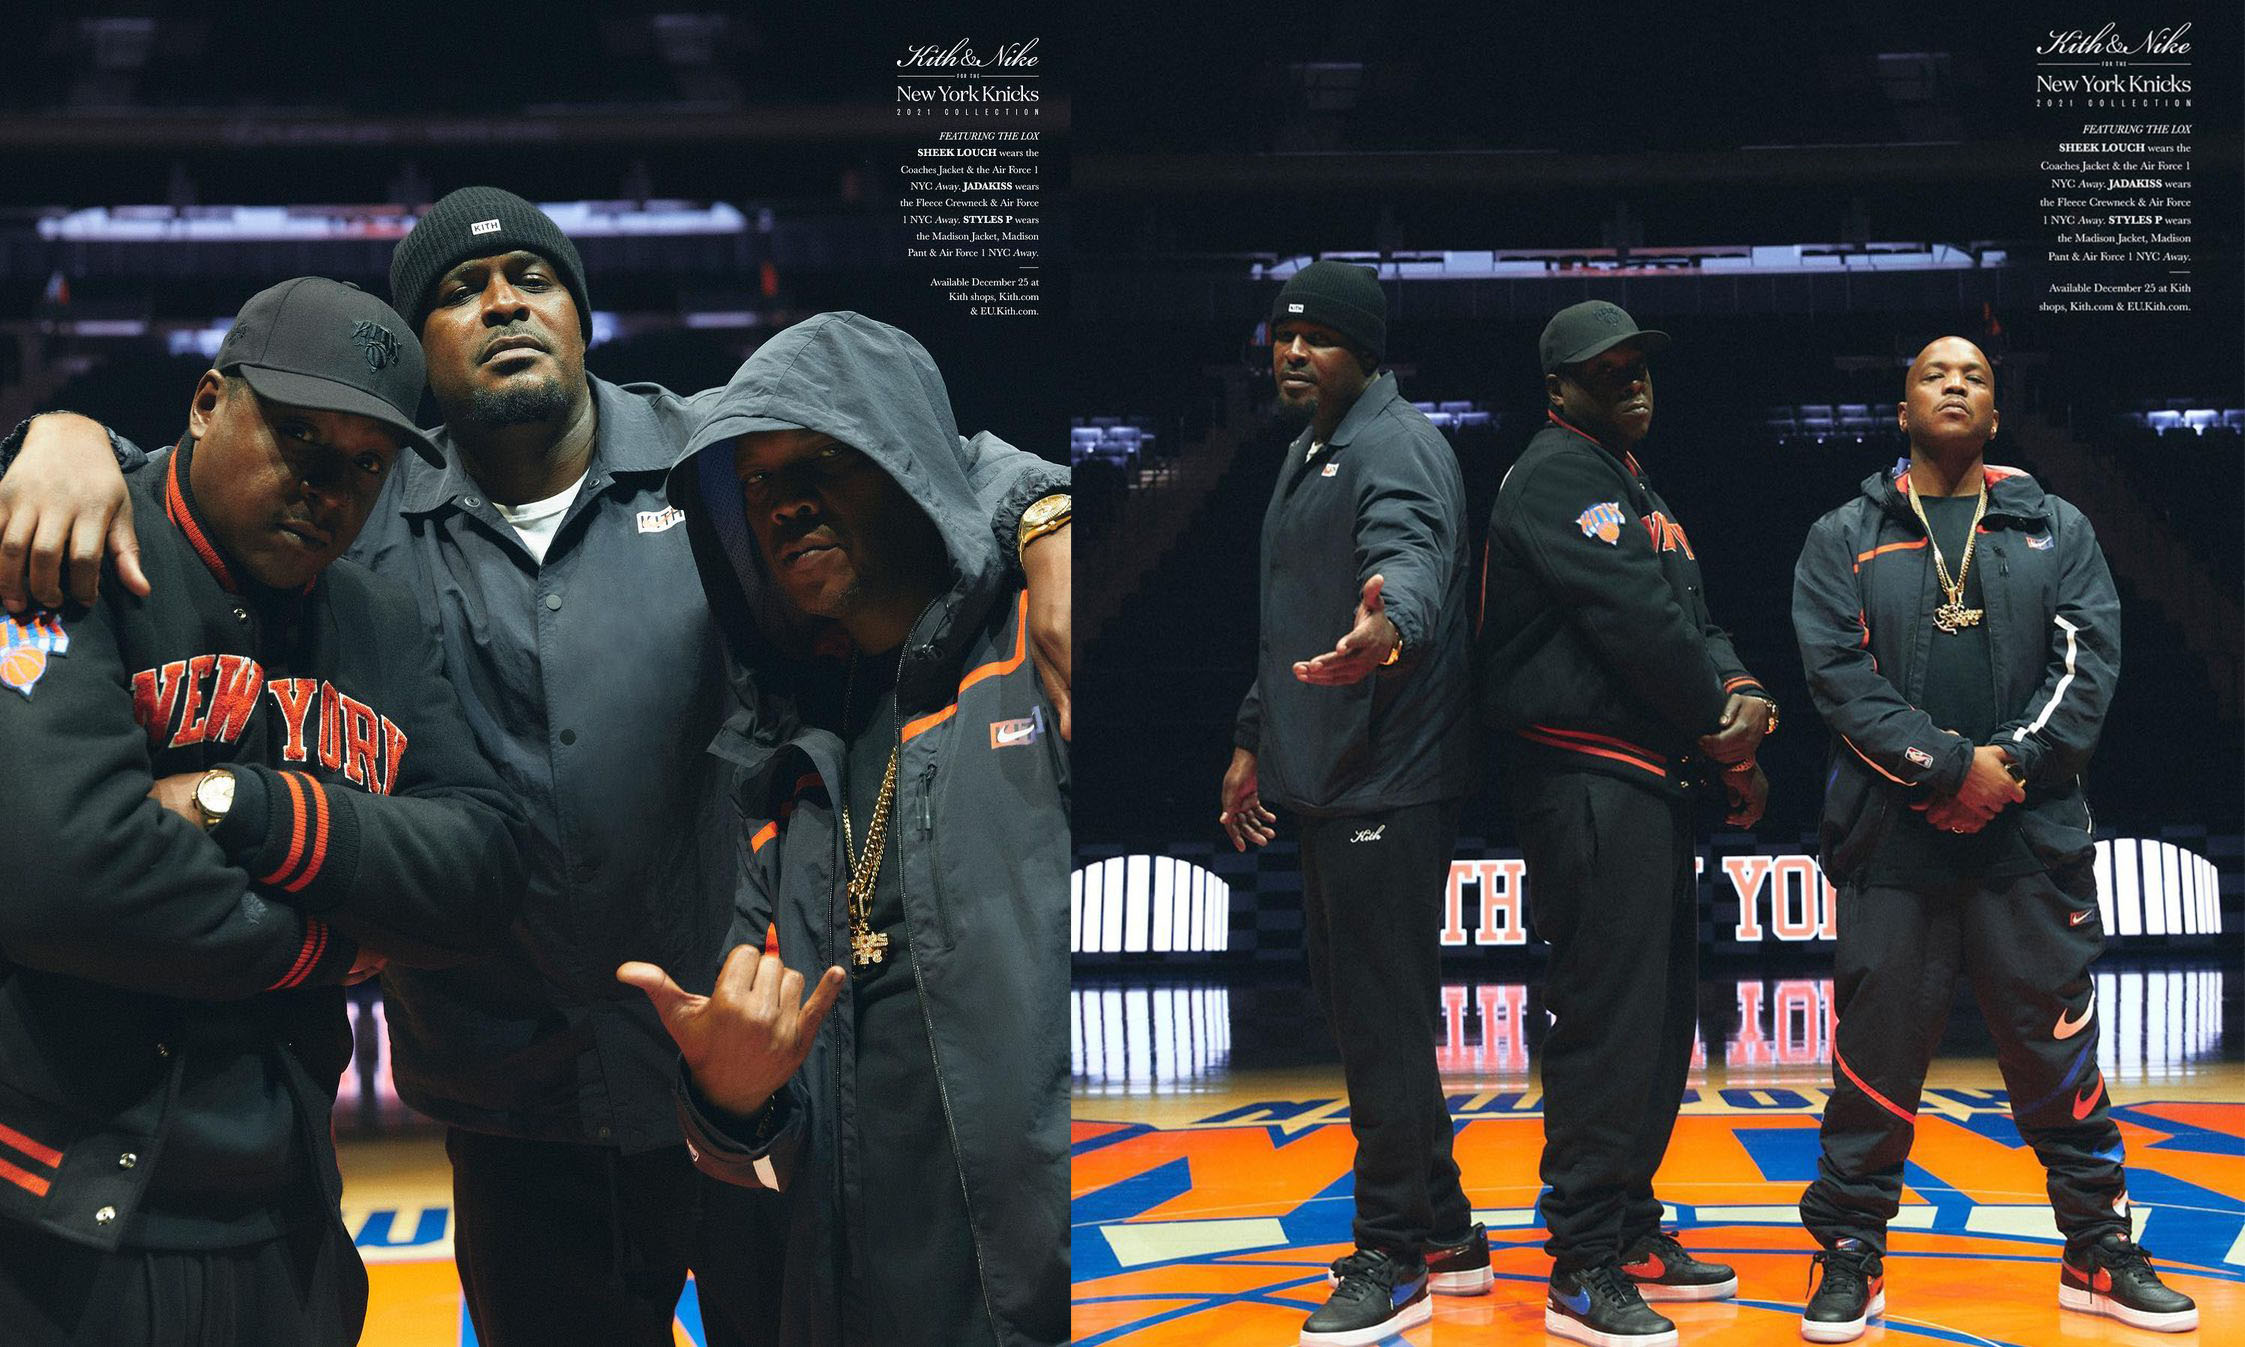 KITH x Nike x New York Knicks 再度携手推出球队服饰系列